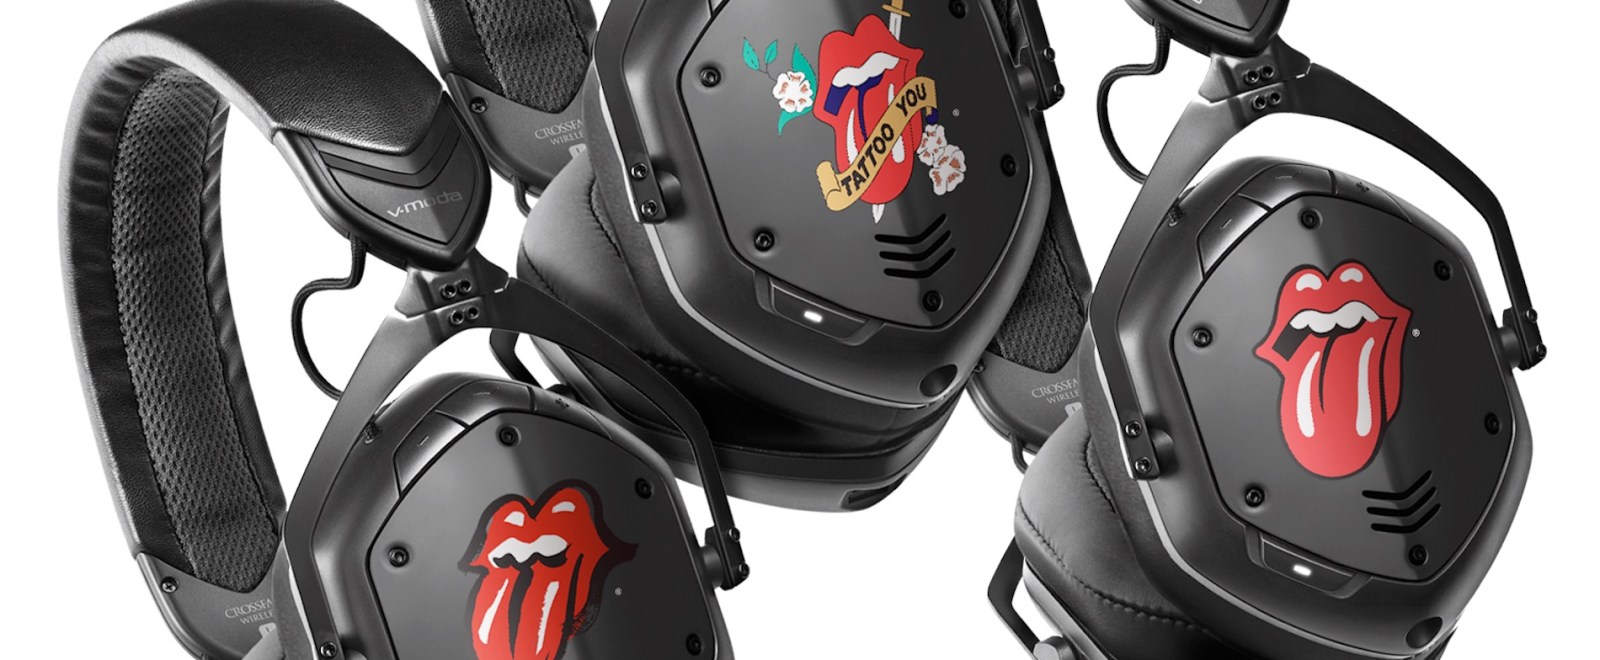 Rolling Stones V-Moda Headphones